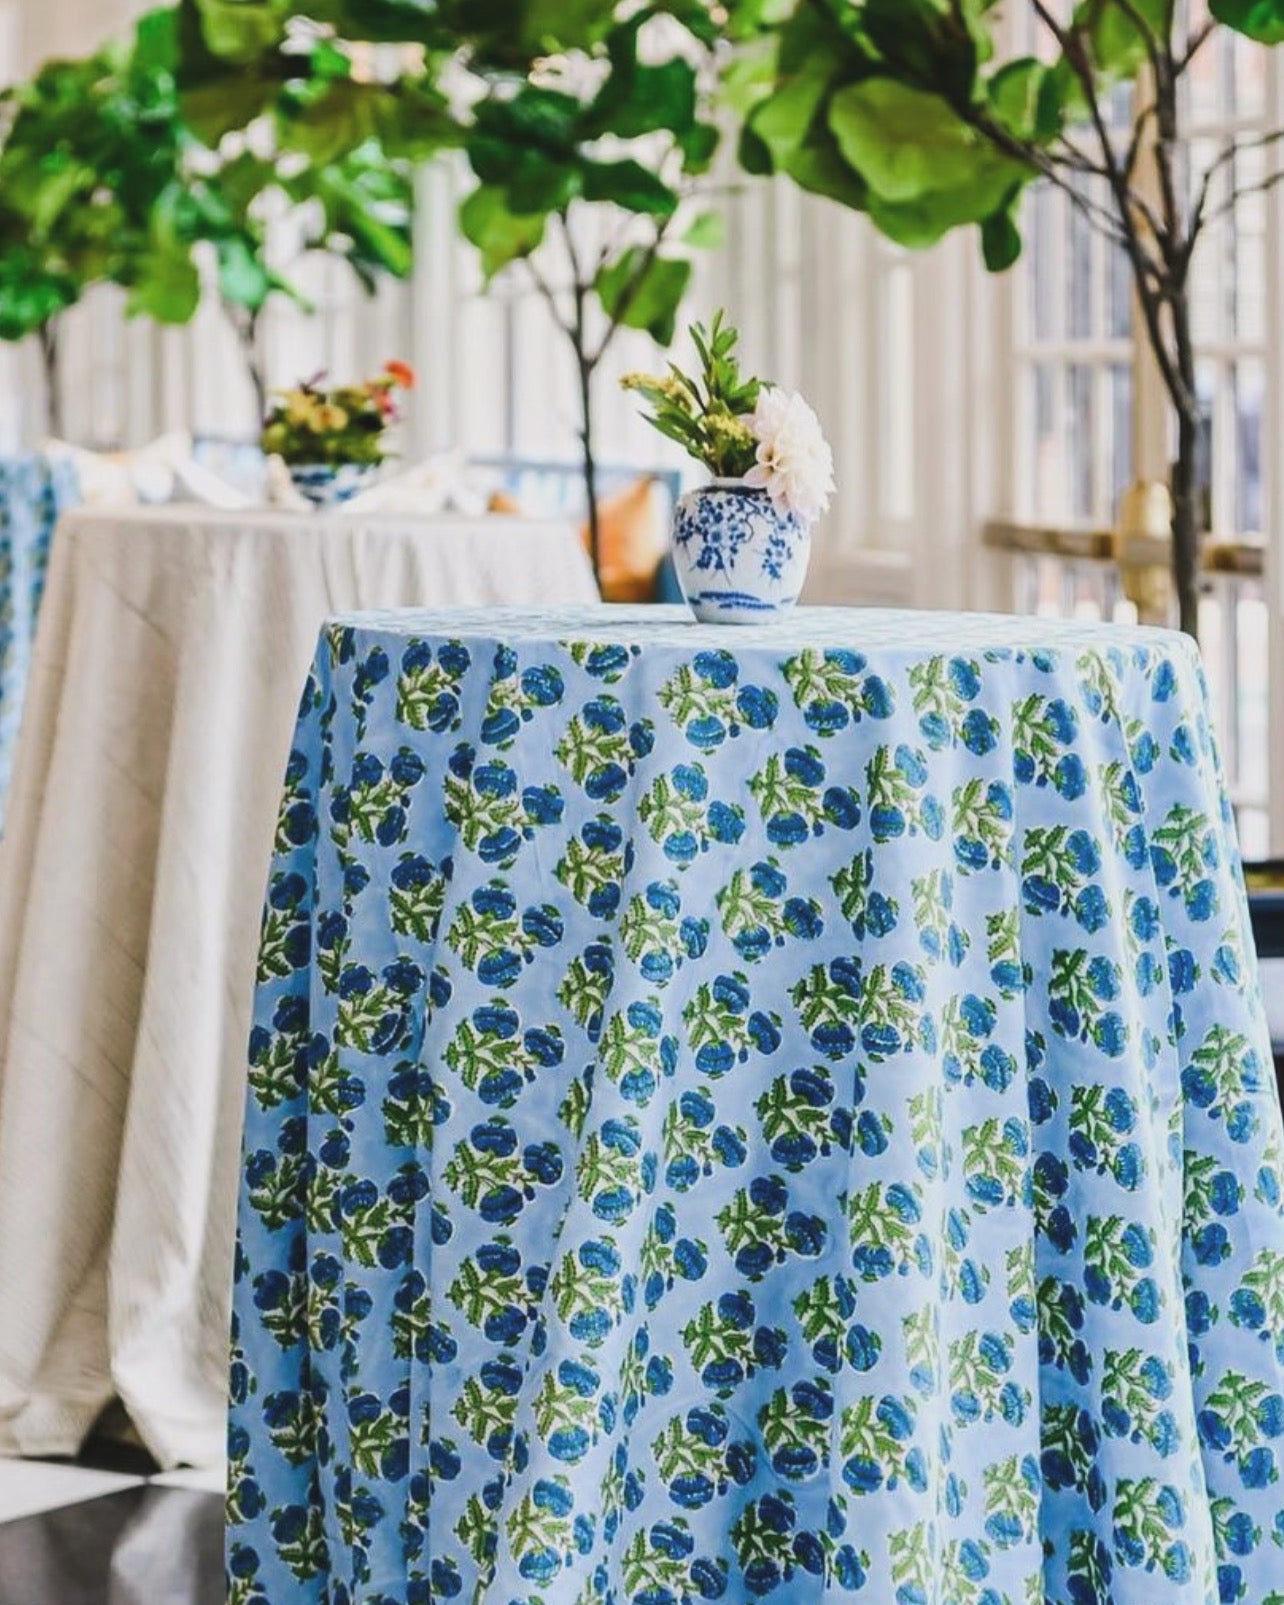 Poms Tablecloth in Bluebird